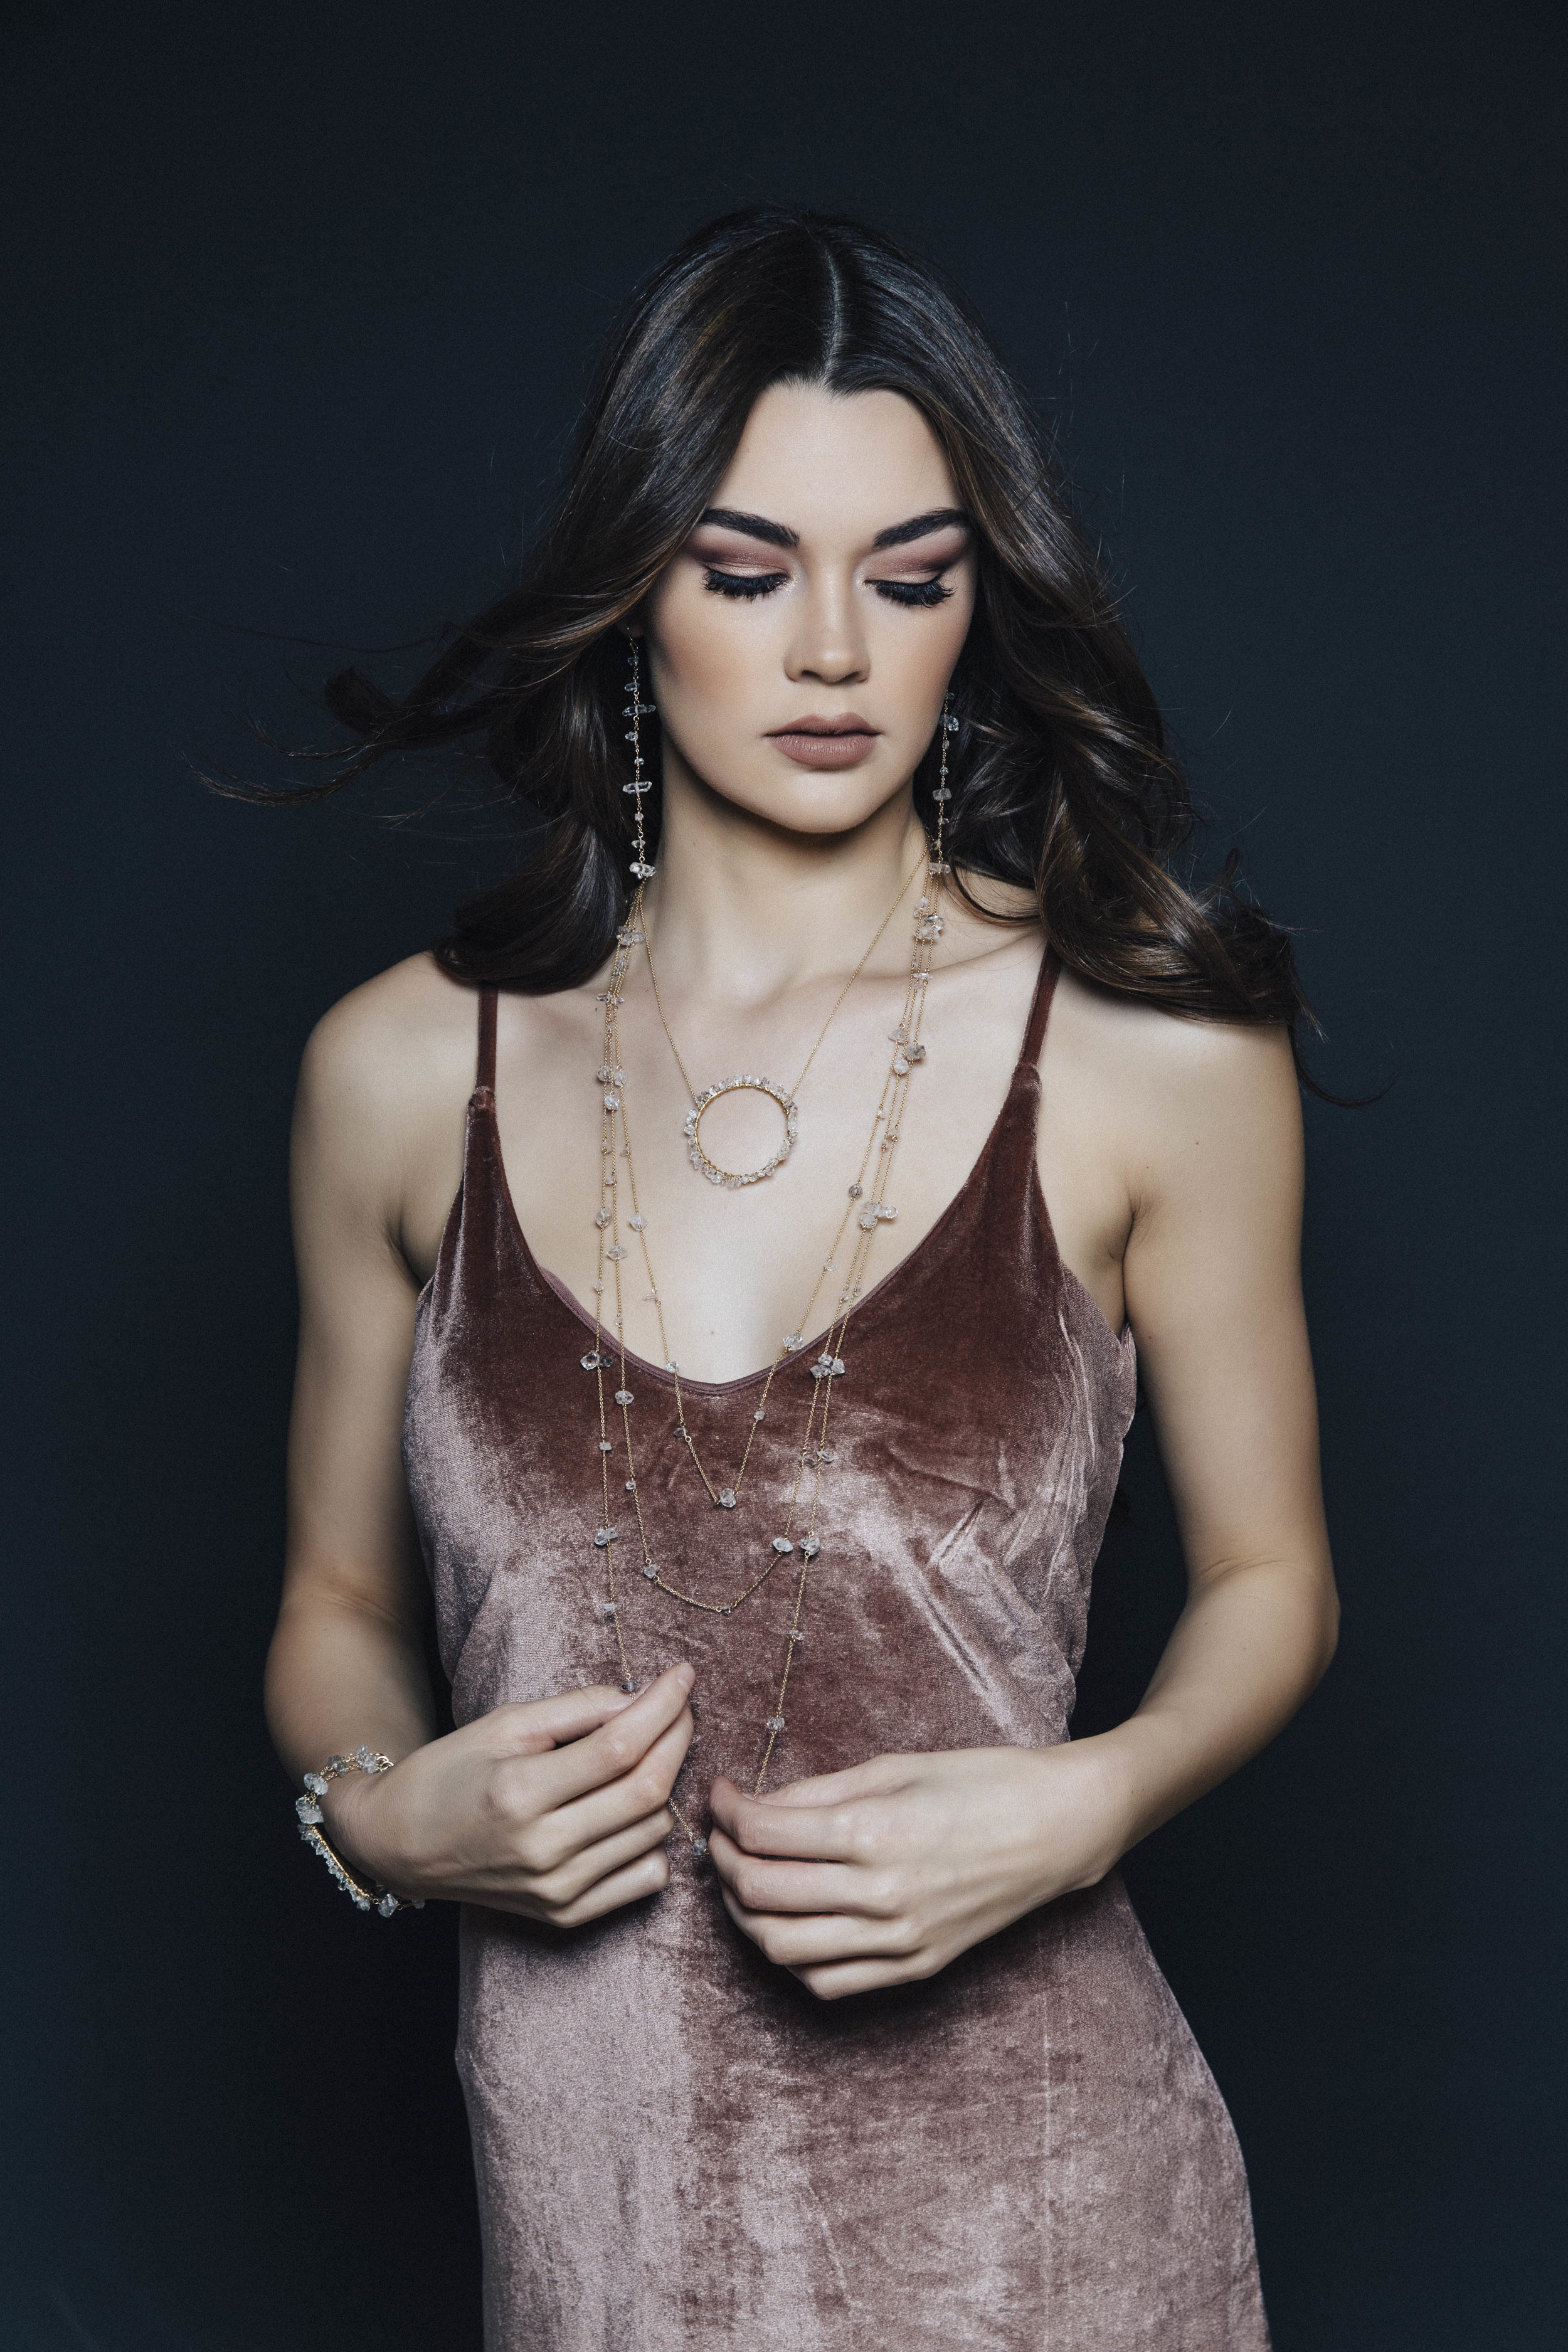 Model wearing herkimer diamond encrusted pendant necklace